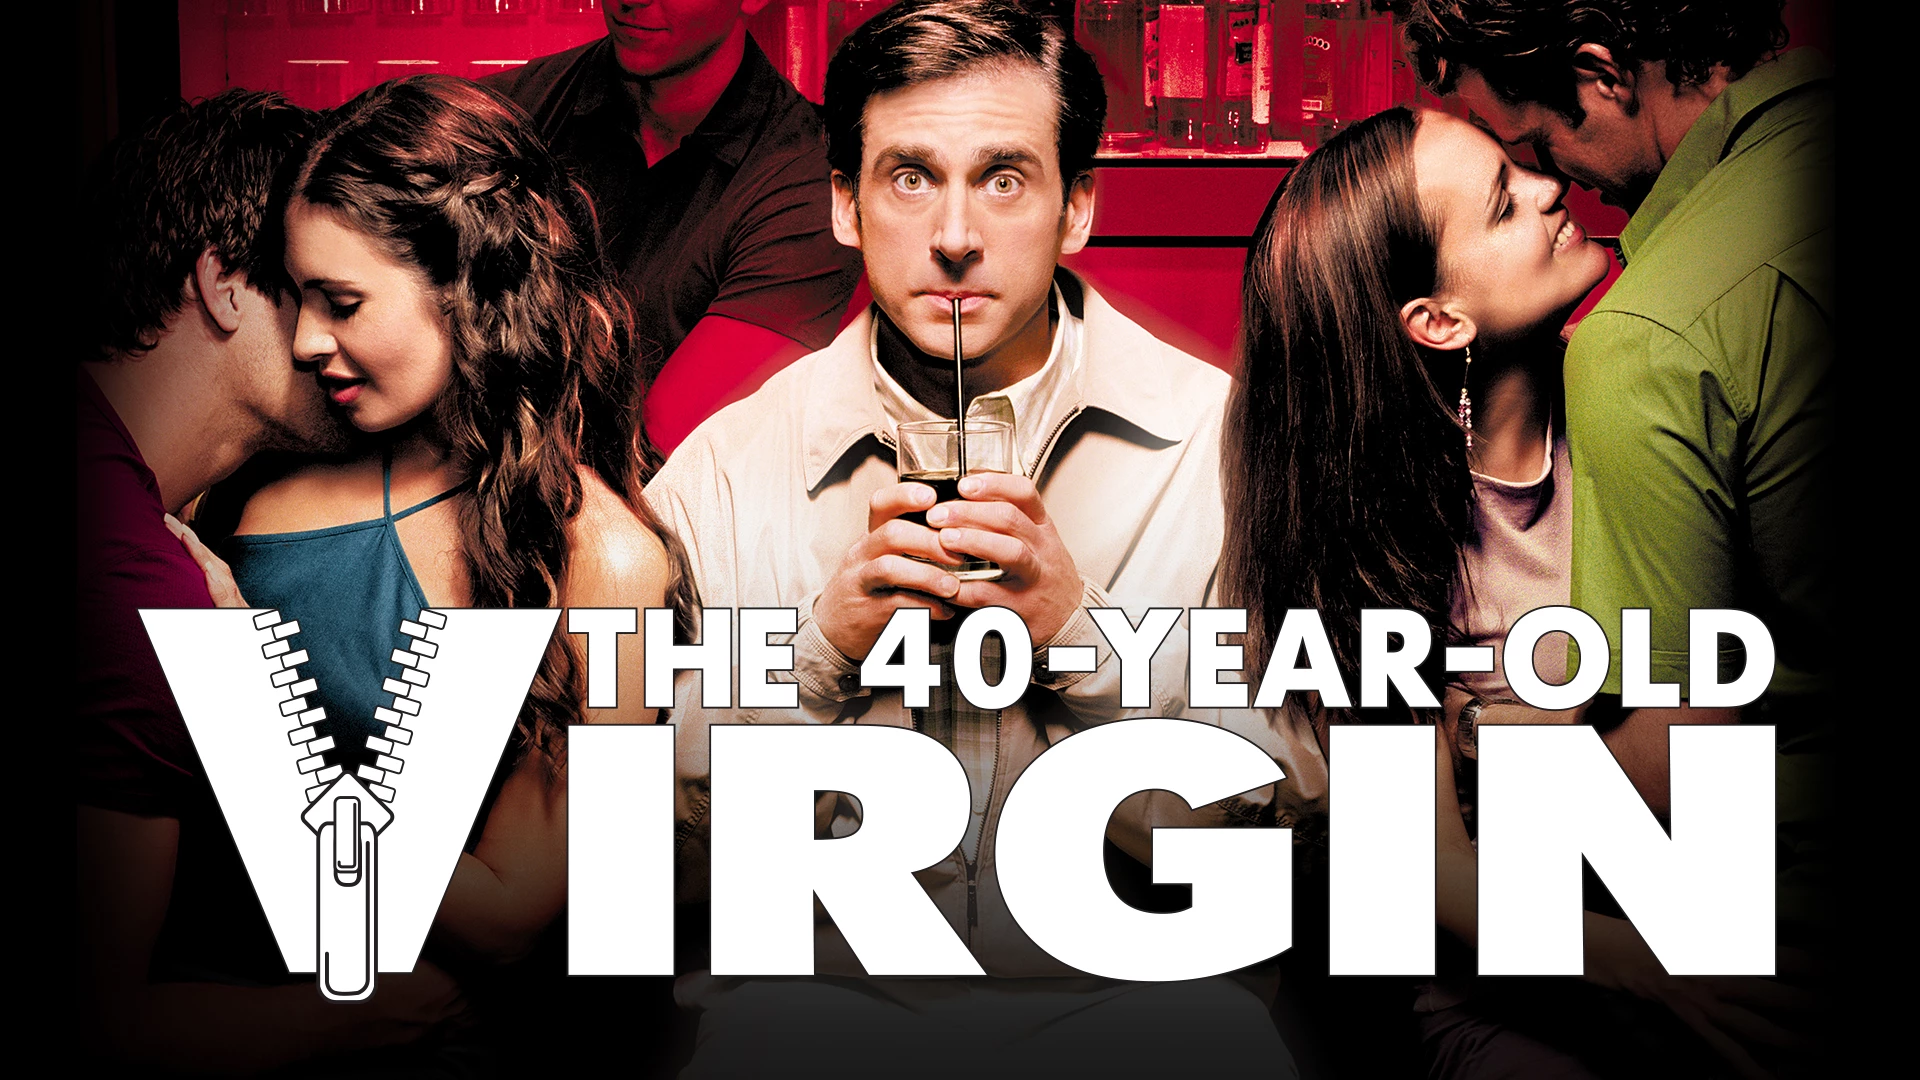 movies like good boys - The 40-Year-Old Virgin (2005)